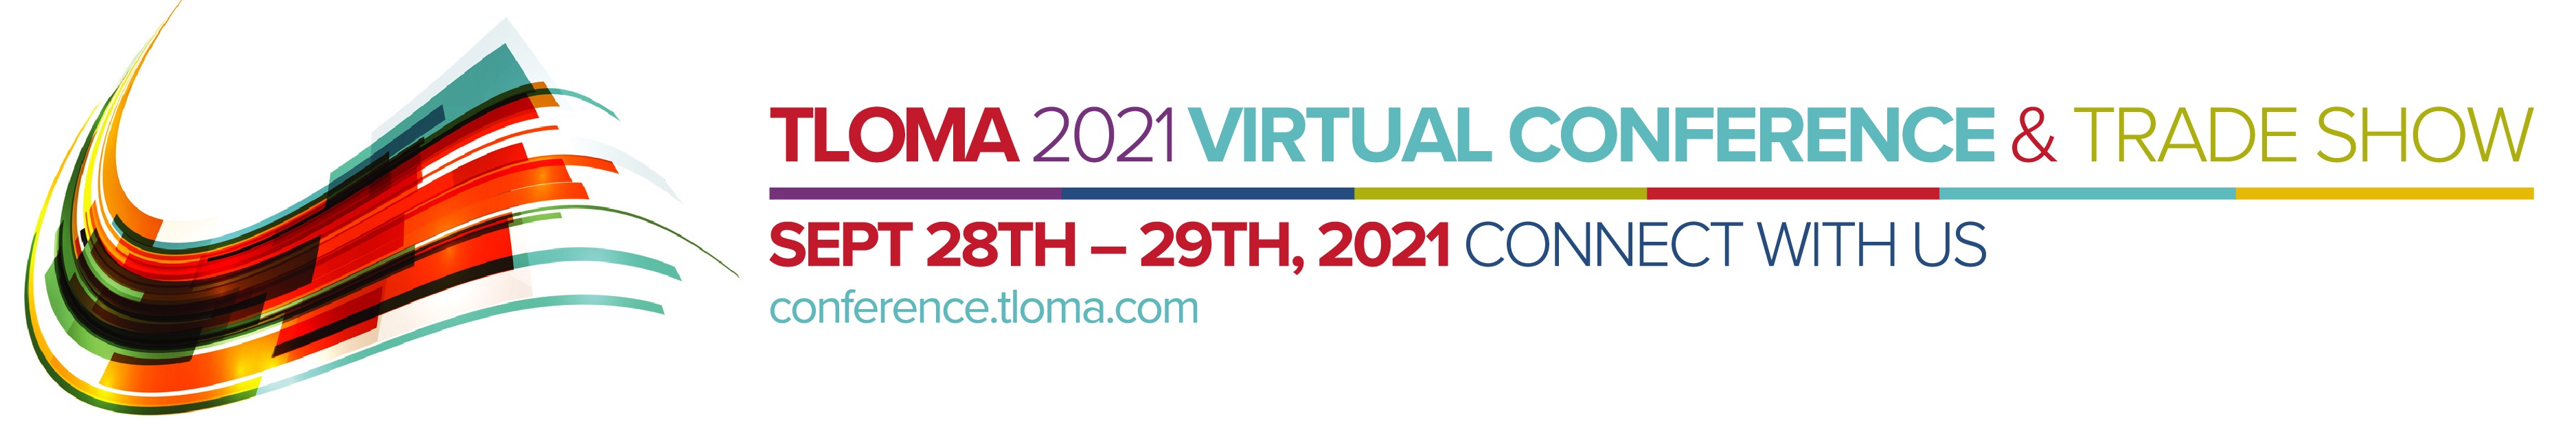 TLOMA 2021 Virtual Conference Leaderboard